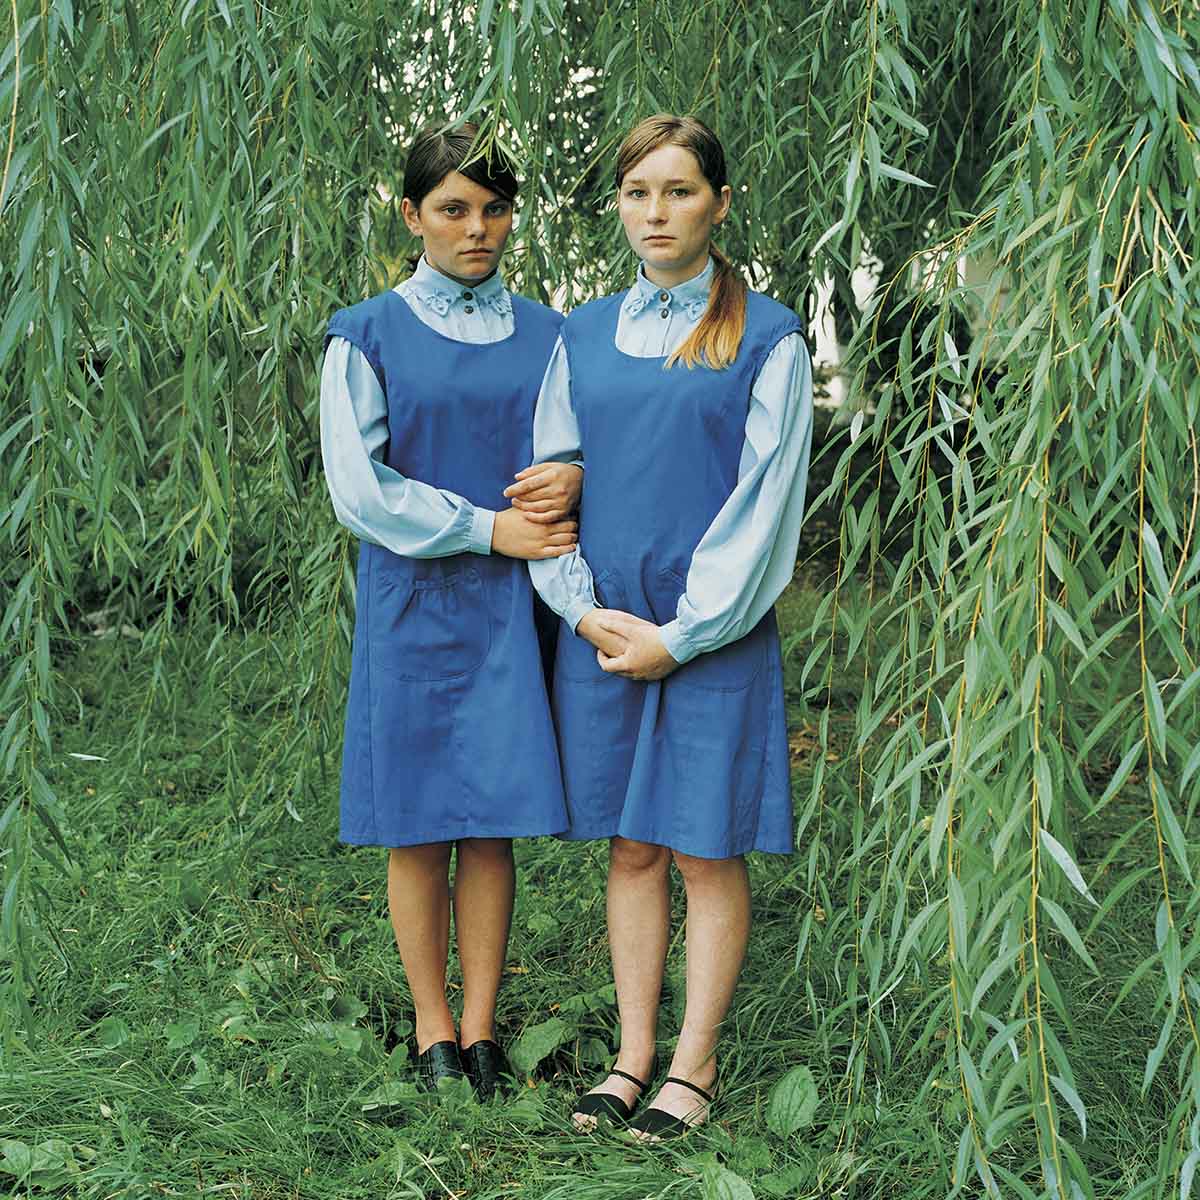 Katya & Dasha Sisters, Juvenile Prison For Girls, Ukraine 2009